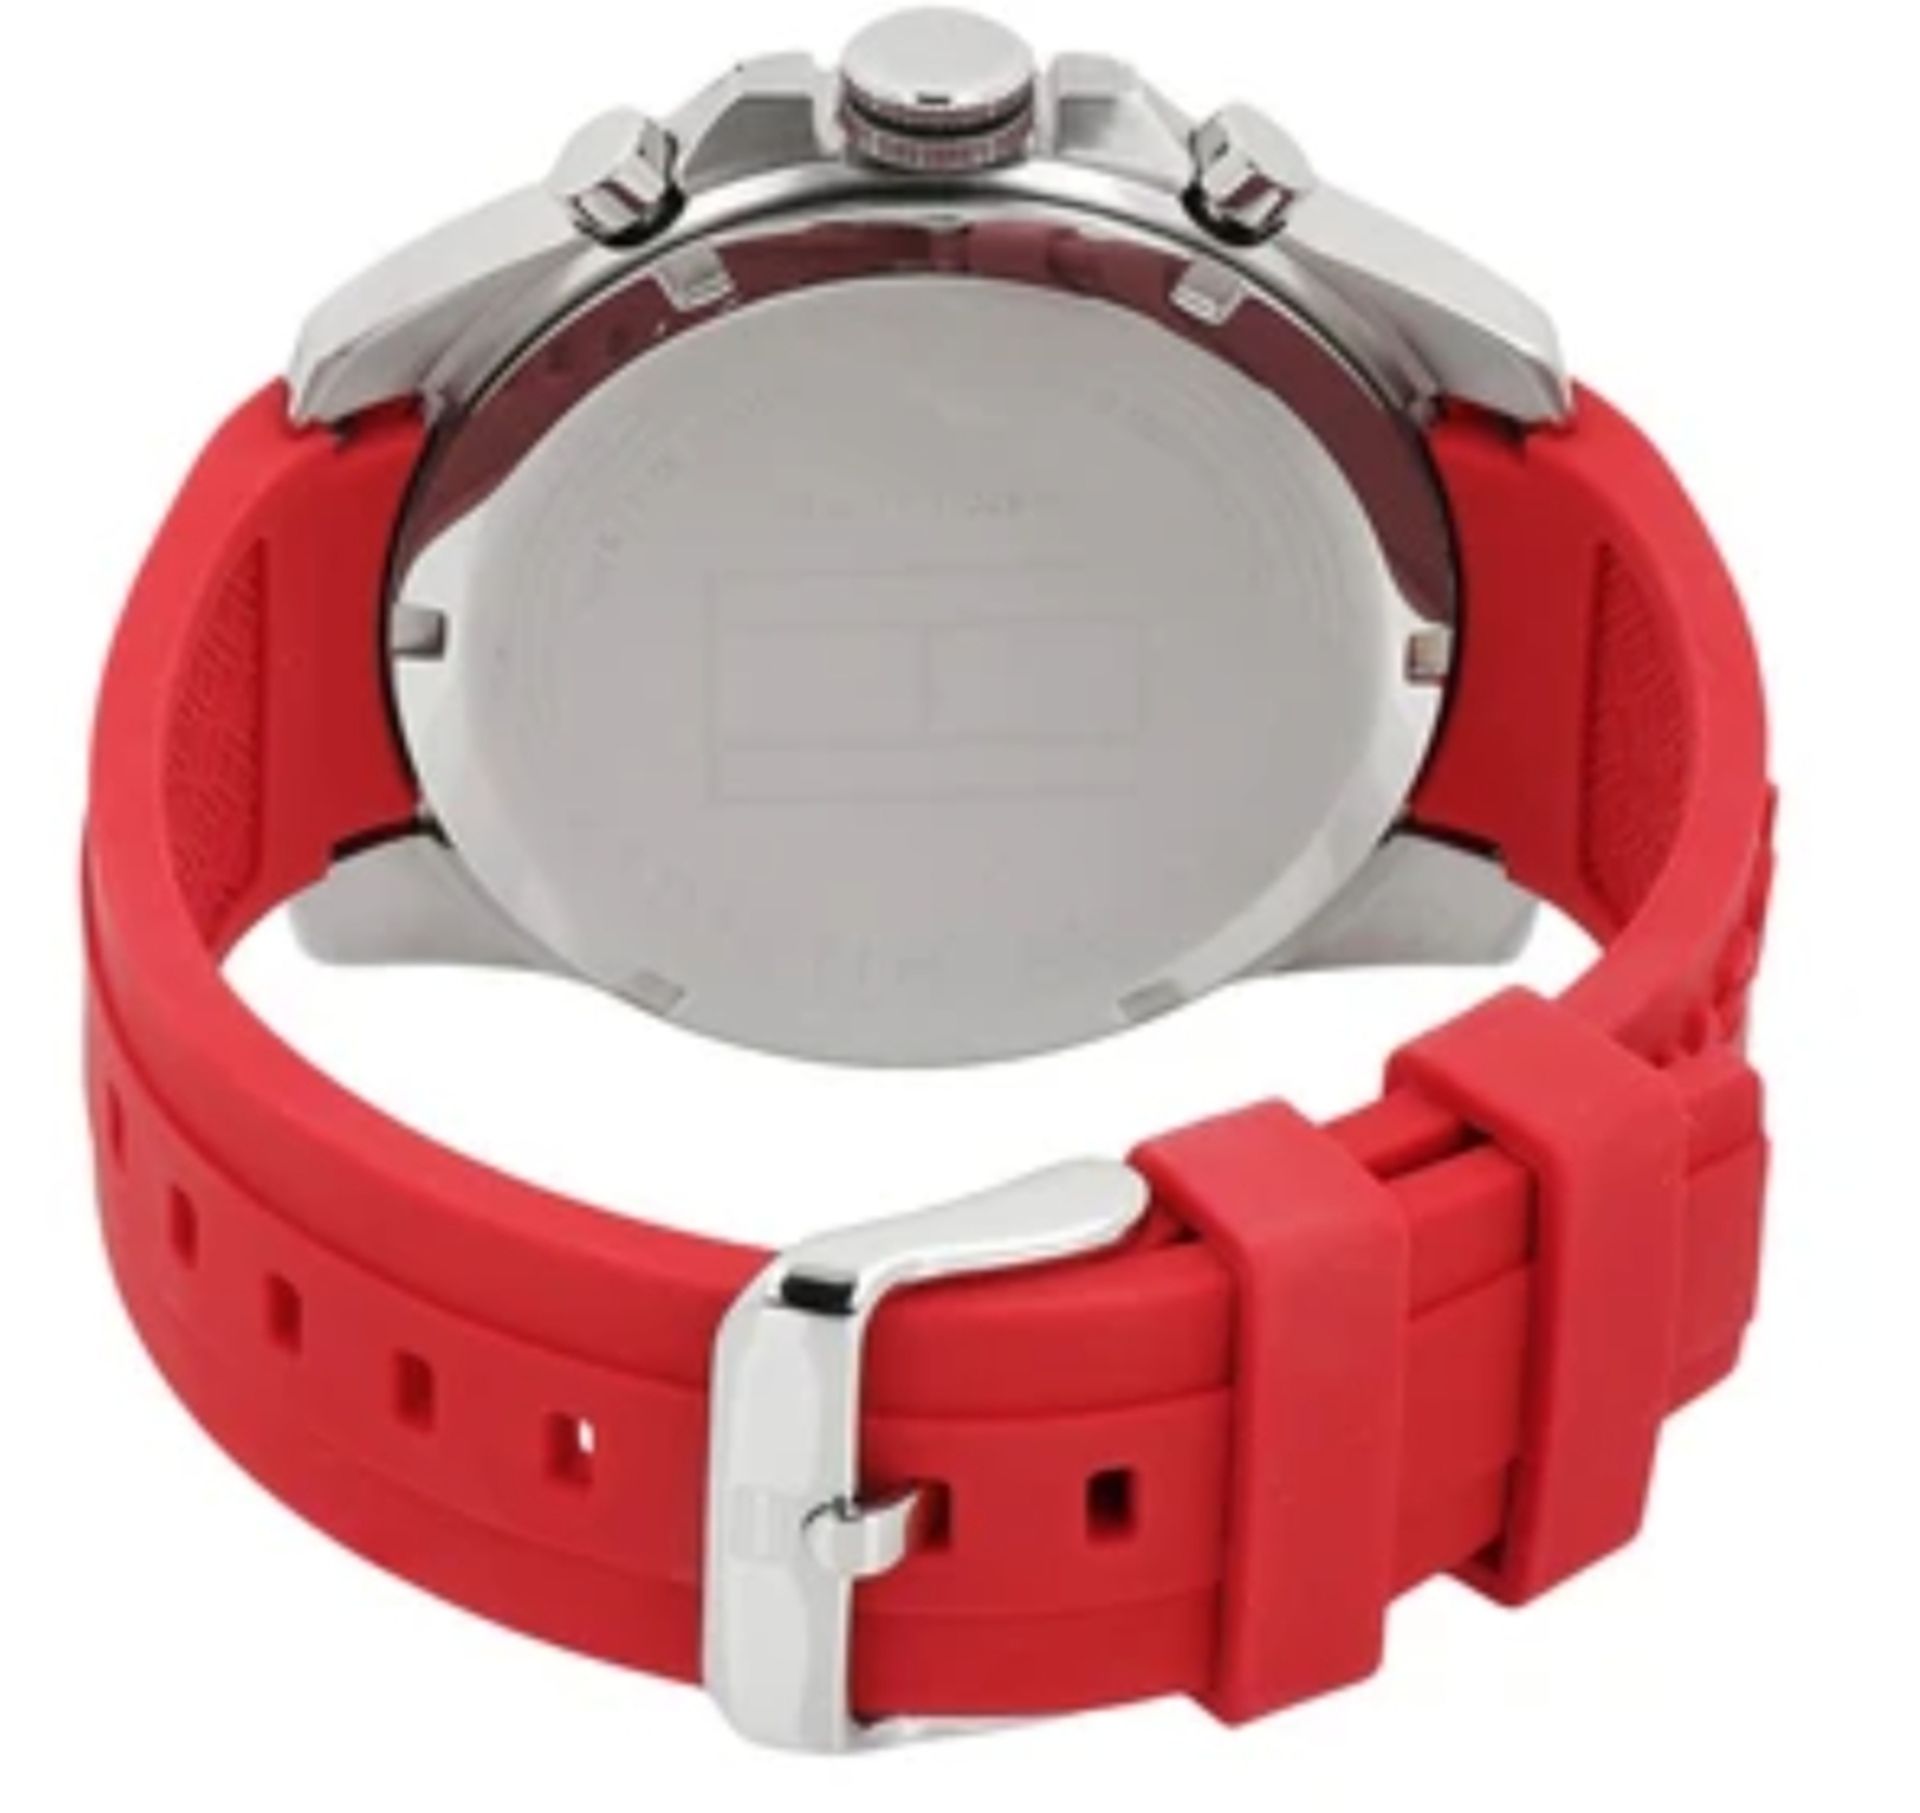 Tommy Hilfiger Men's Red Silicone Strap Decker Watch 1791351 - Image 2 of 6